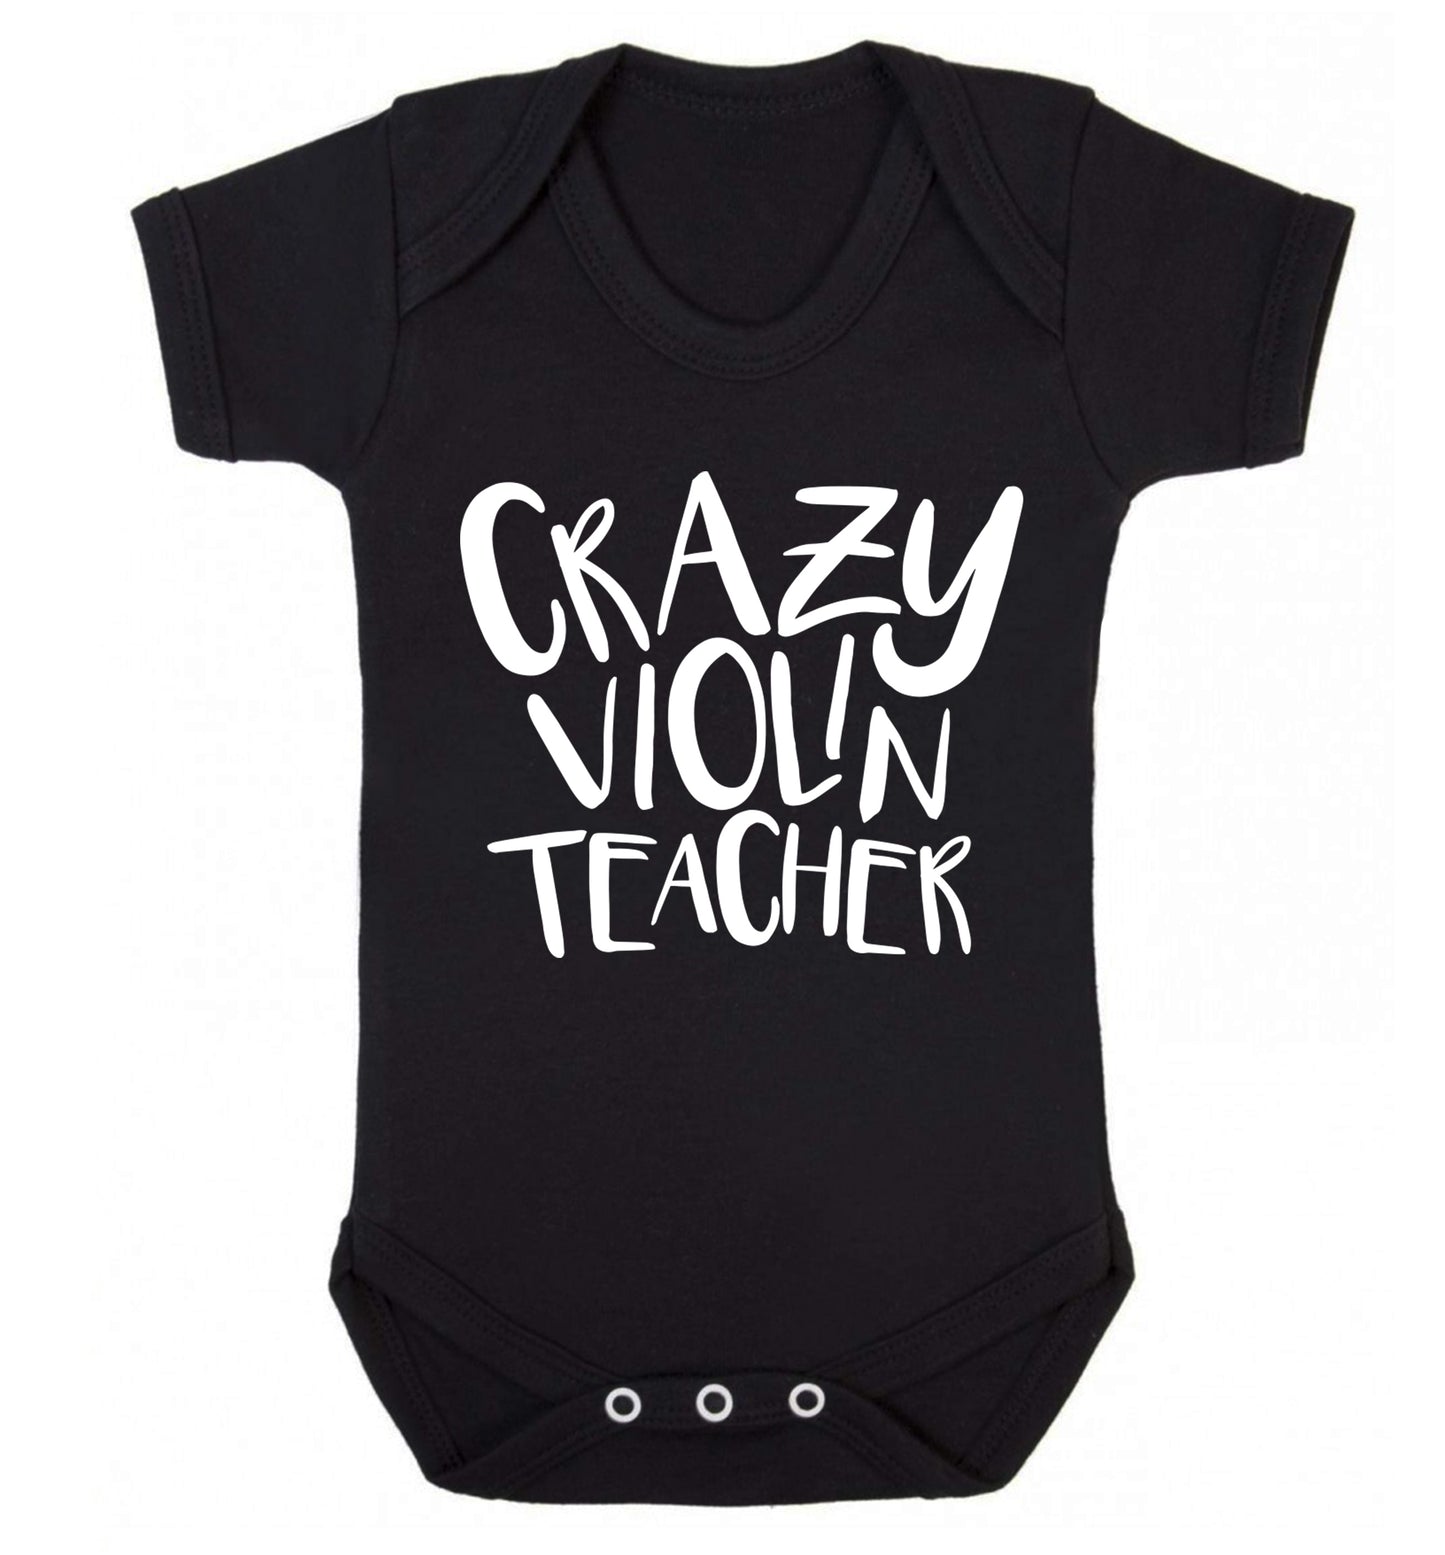 Crazy violin teacher Baby Vest black 18-24 months